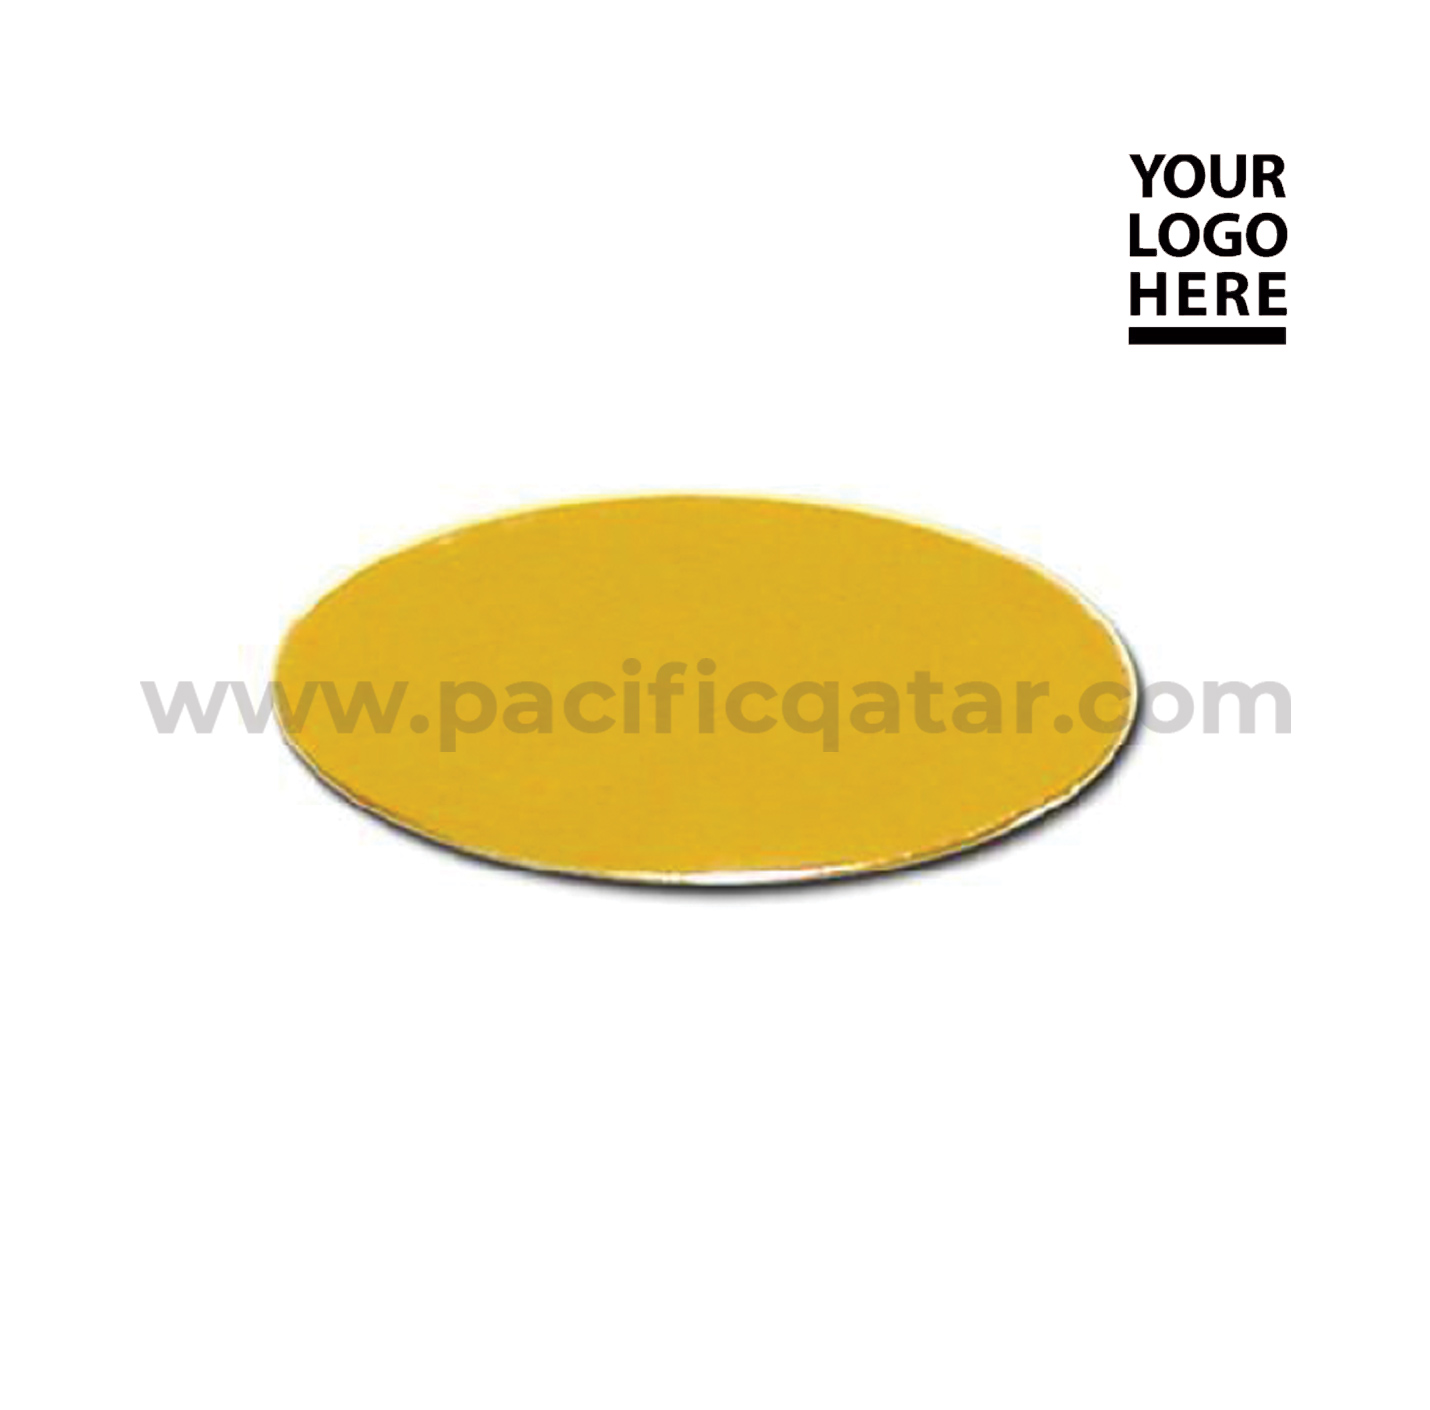 Oval Shape Gold Metal Badge